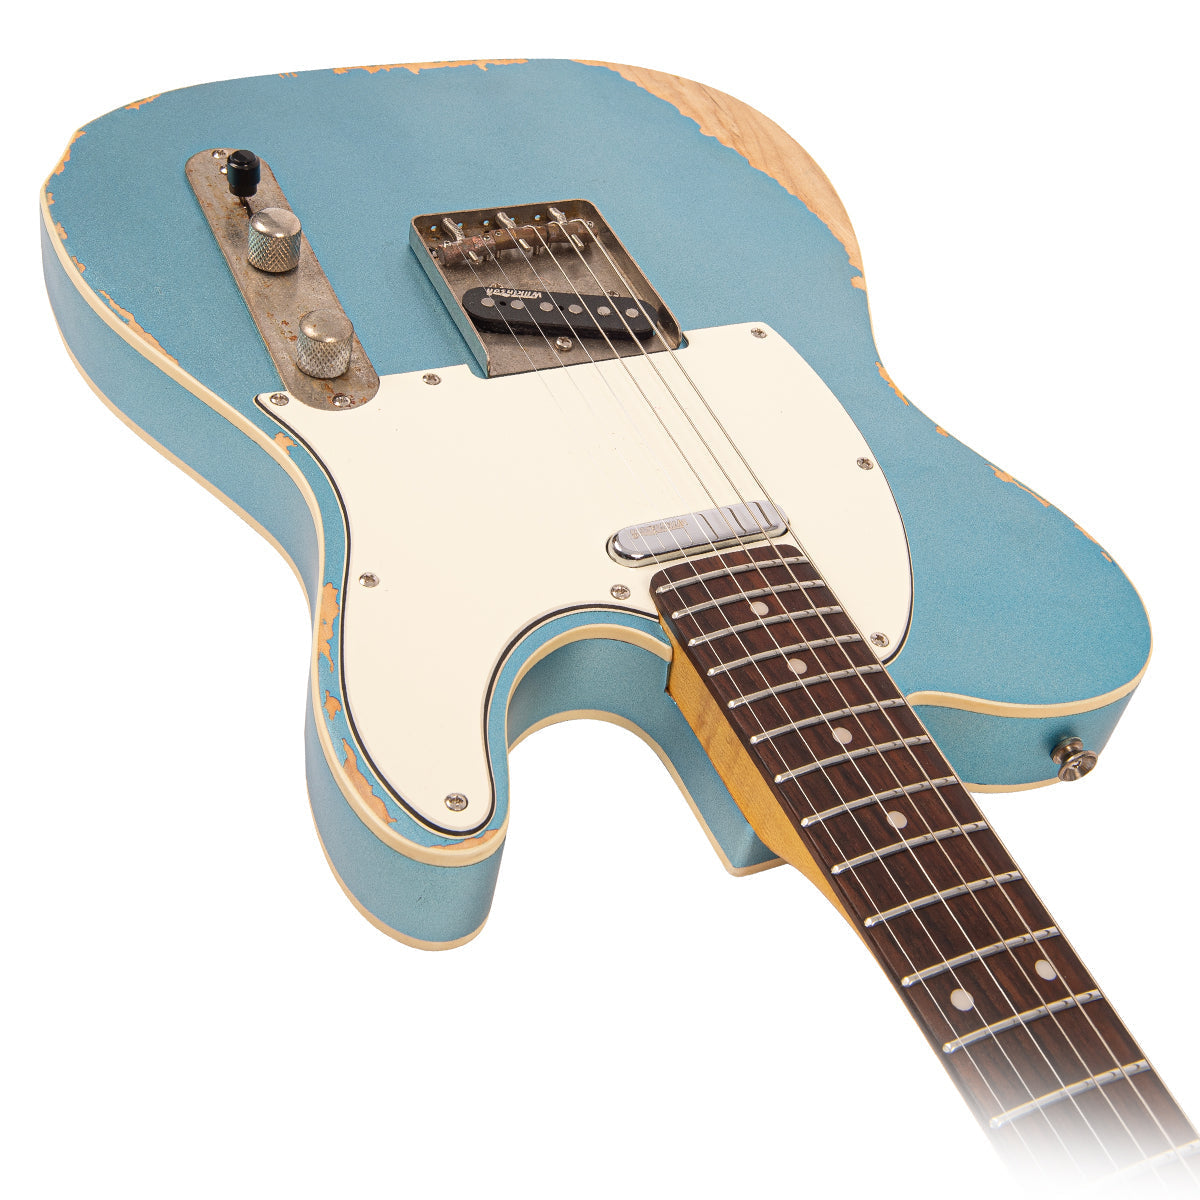 Vintage V66 Paul Rose Signature Electric Guitar ~ Distressed Gun Hill Blue, Electric Guitar for sale at Richards Guitars.